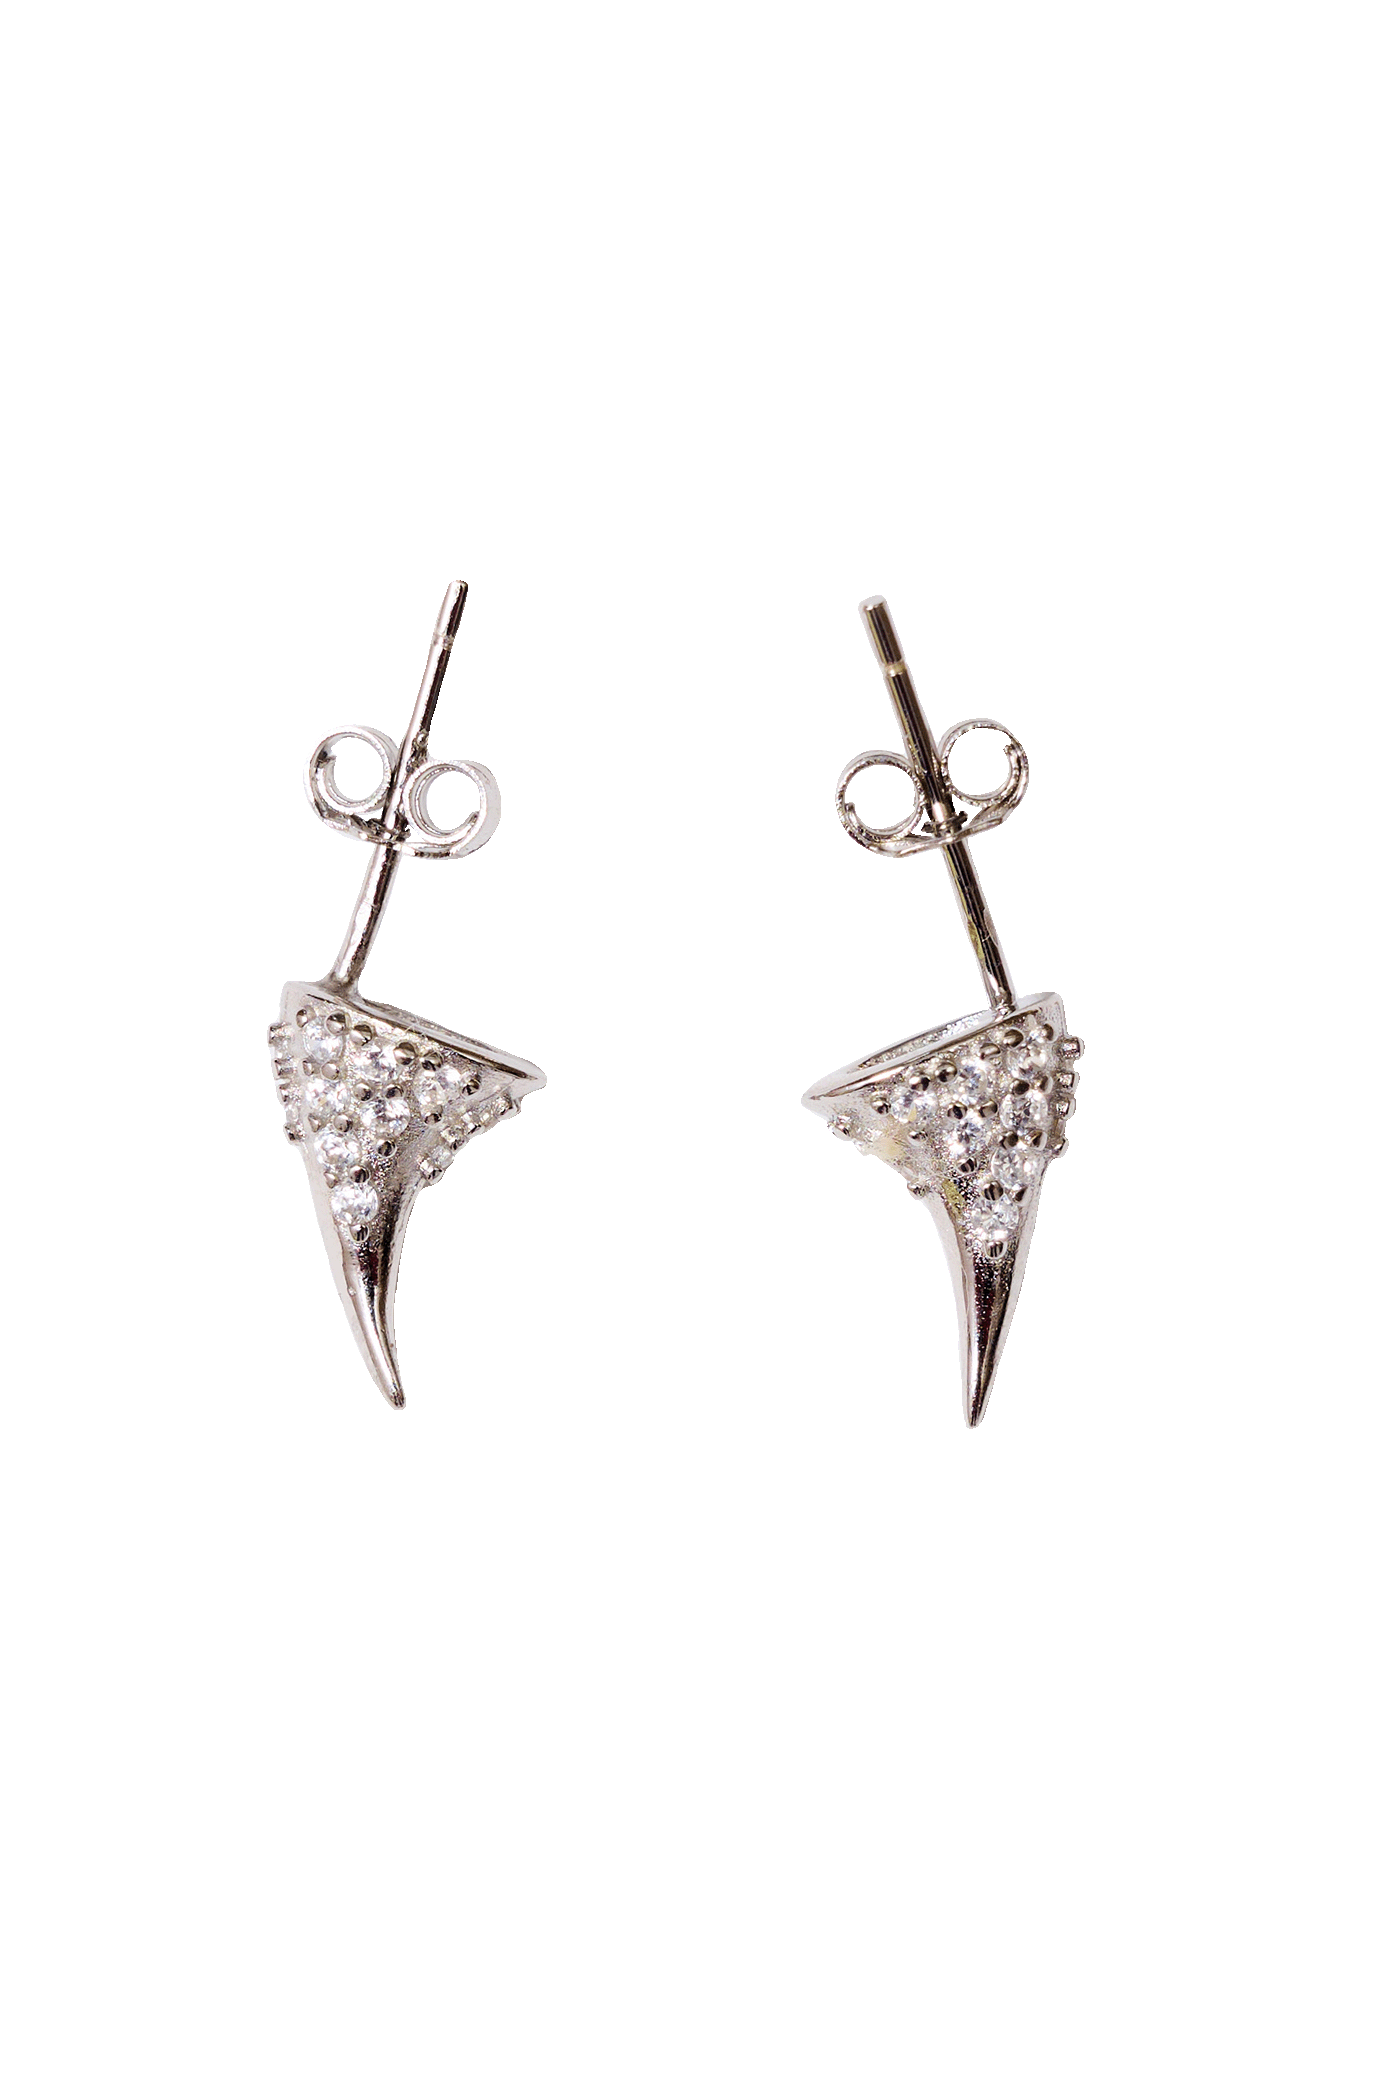 The Princess Kate Chunky Crystal Encrusted Chain Link Bracelet – Jewel Candy